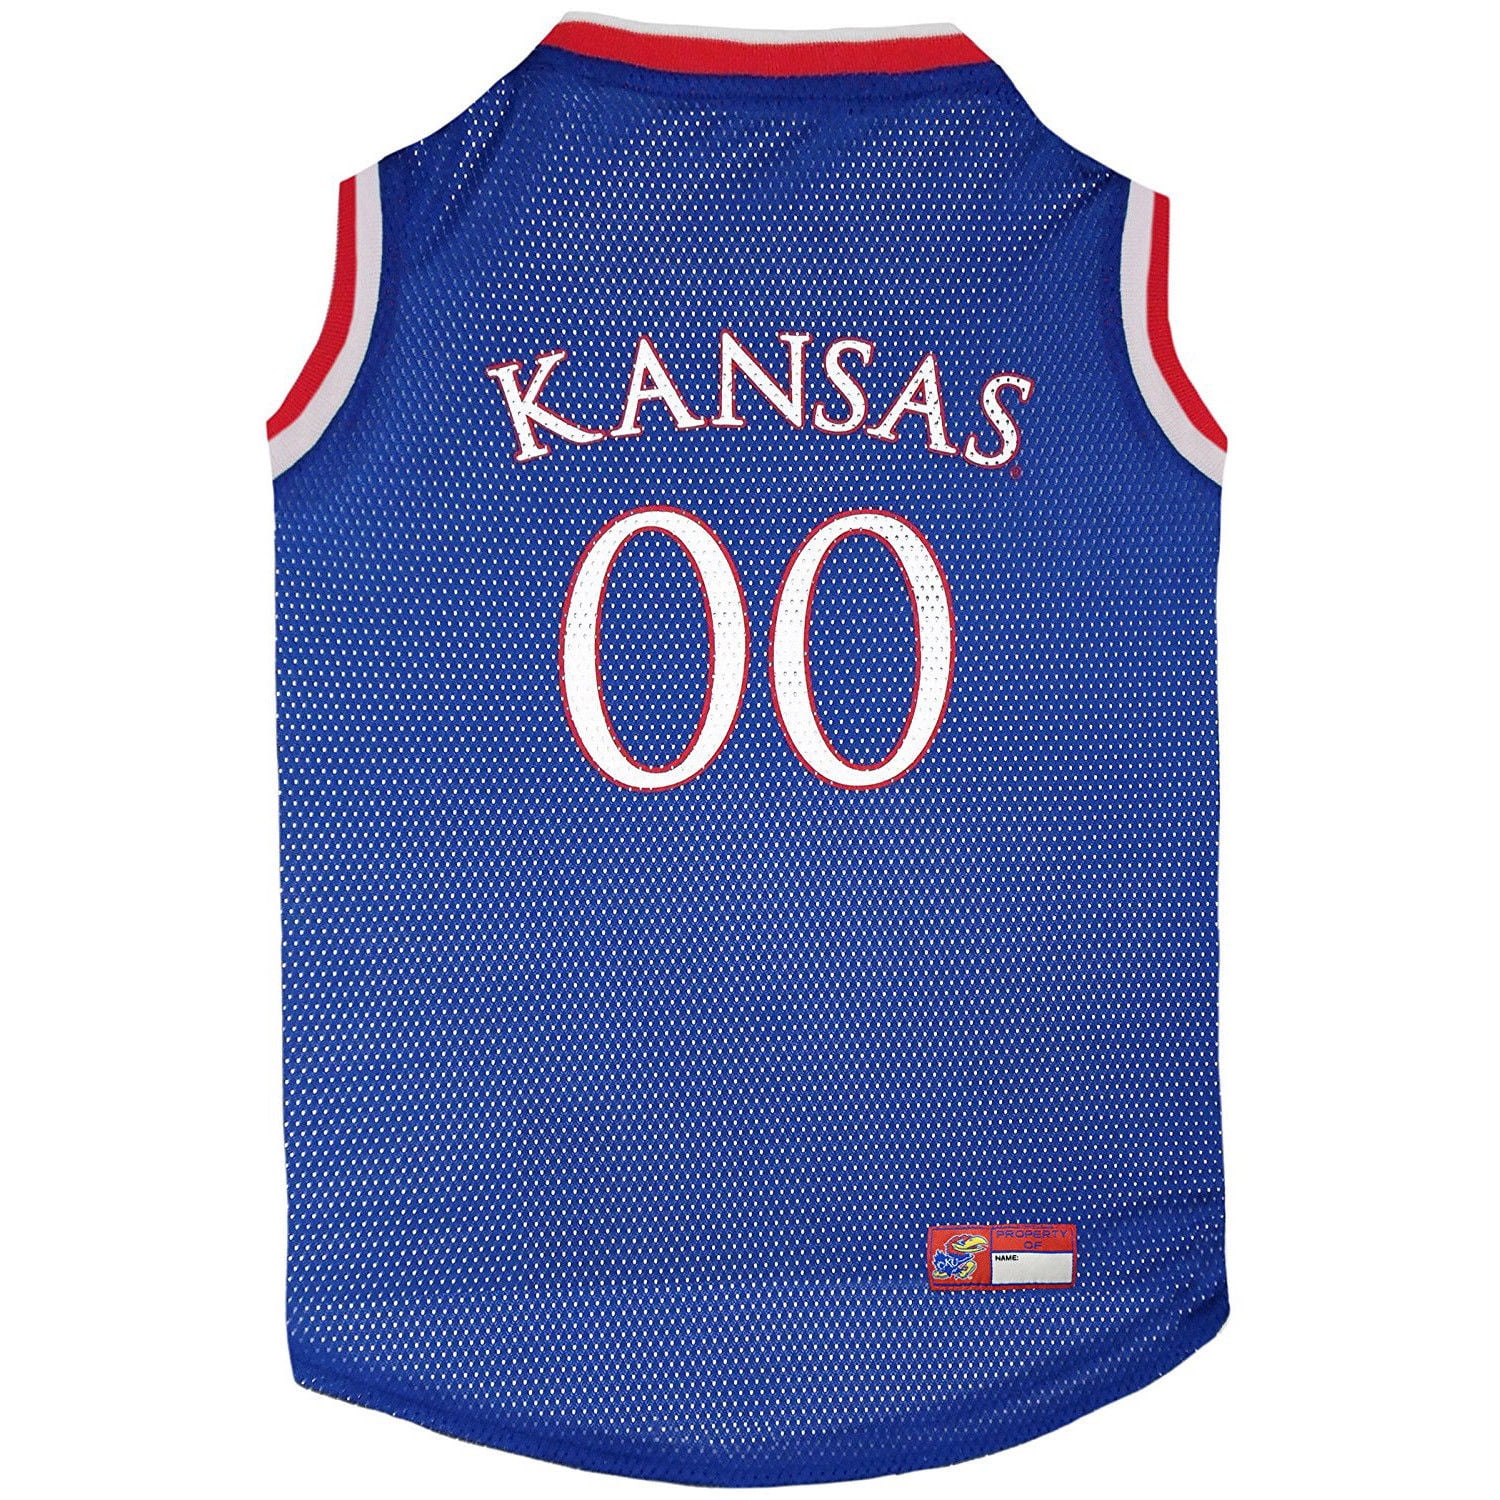 Kansas Basketball Gear, Kansas Jayhawks College Basketball Jerseys